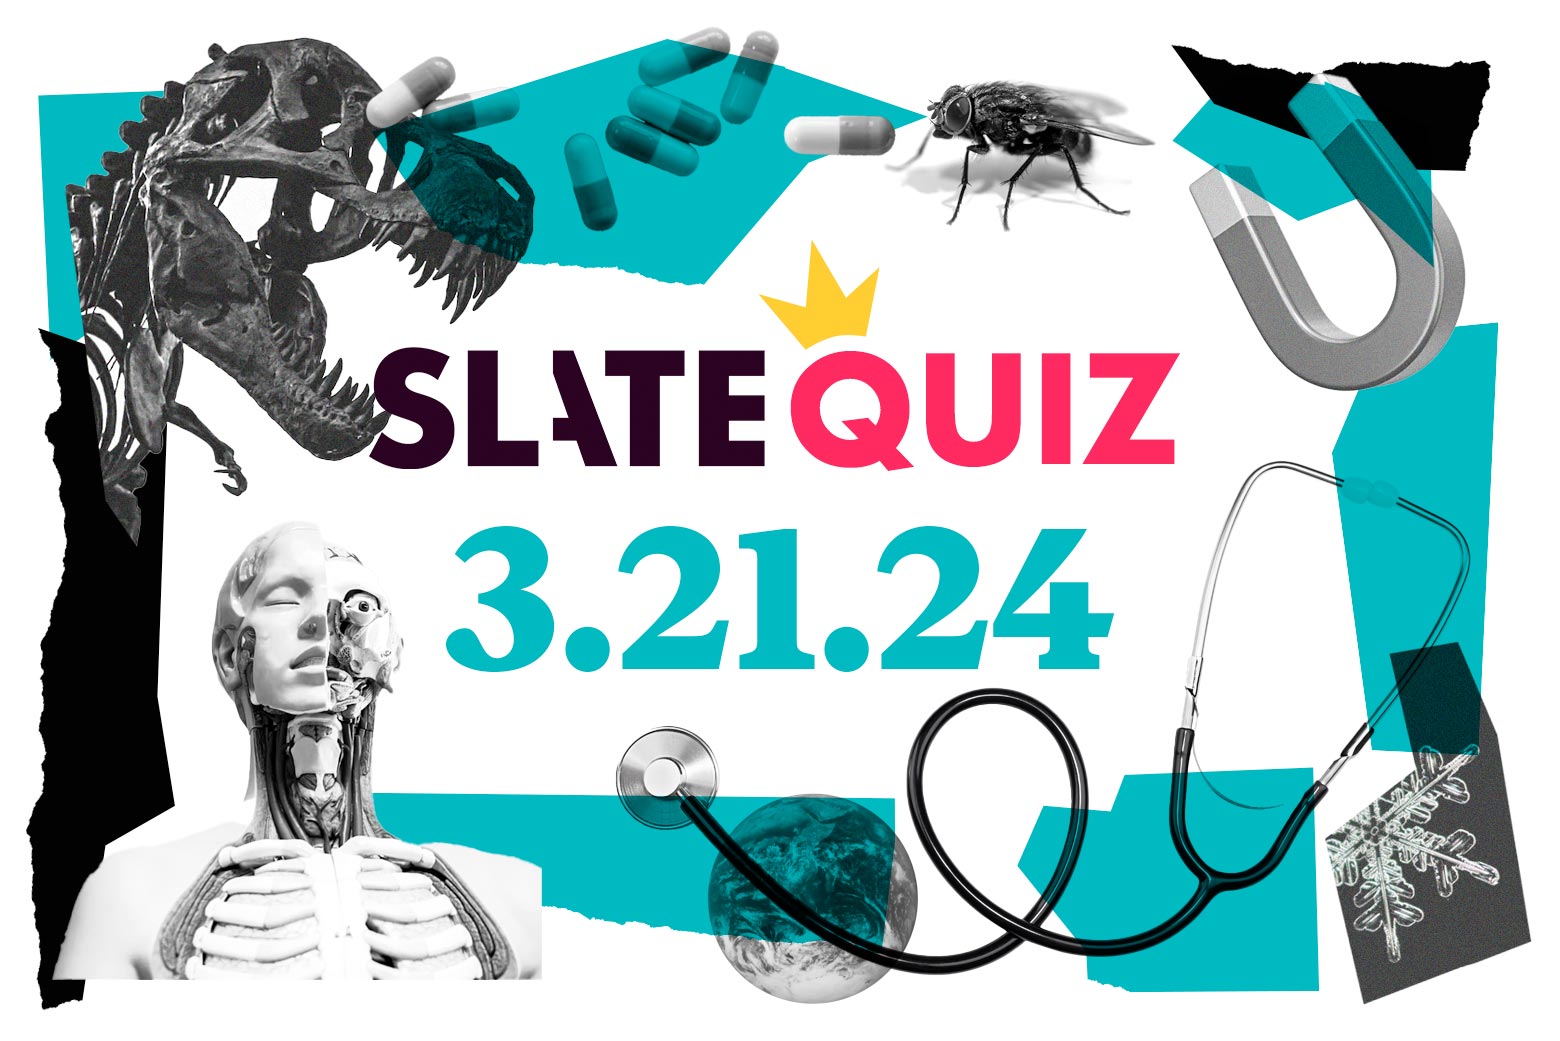 Slate’te Günlük Bilim Trivia’sı